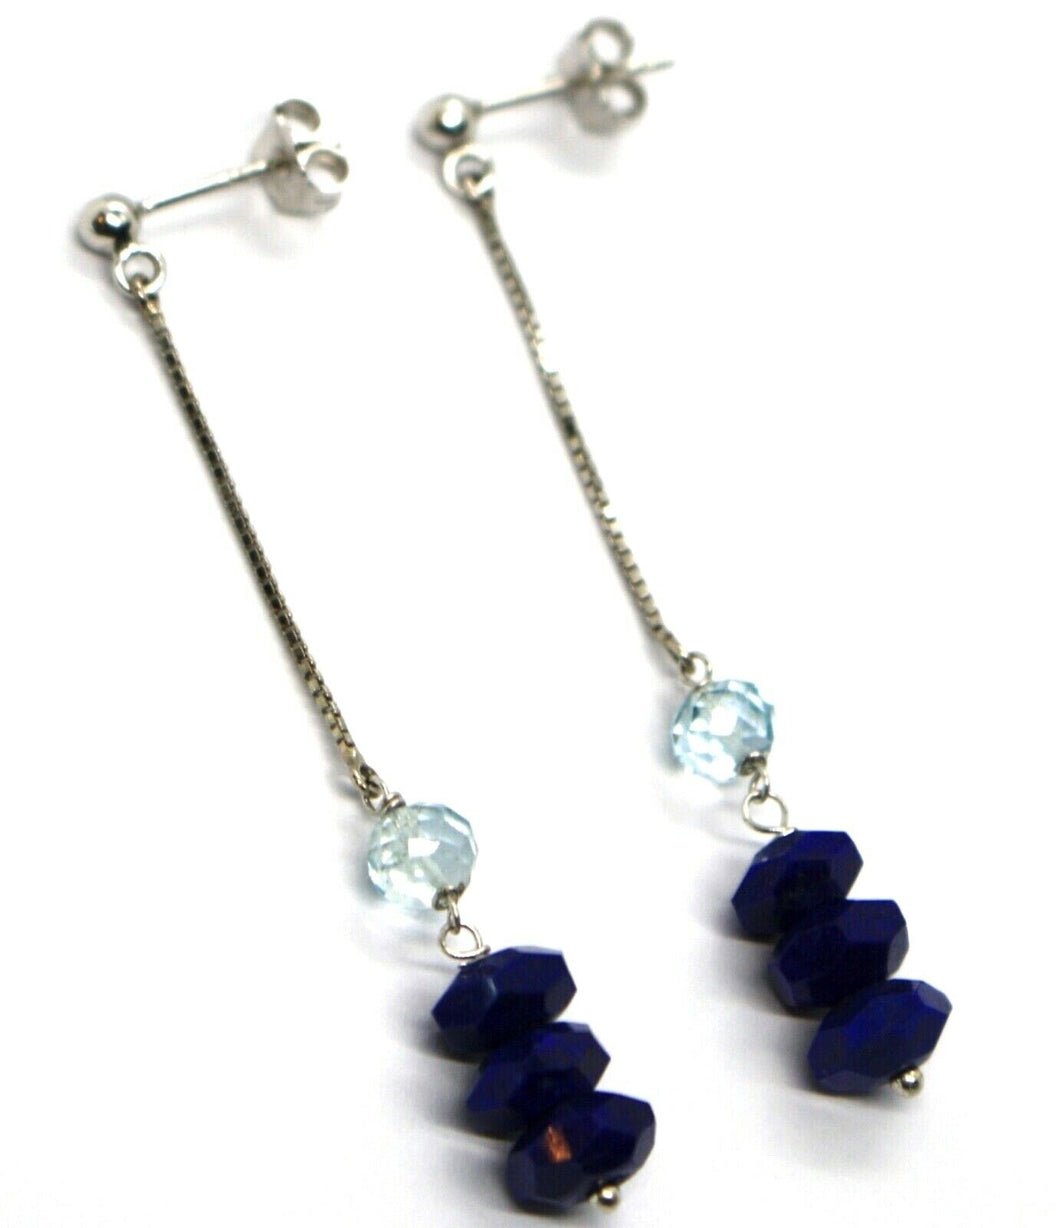 18k white gold pendant earrings, lapis lazuli, aquamarine, 2.3 inches length